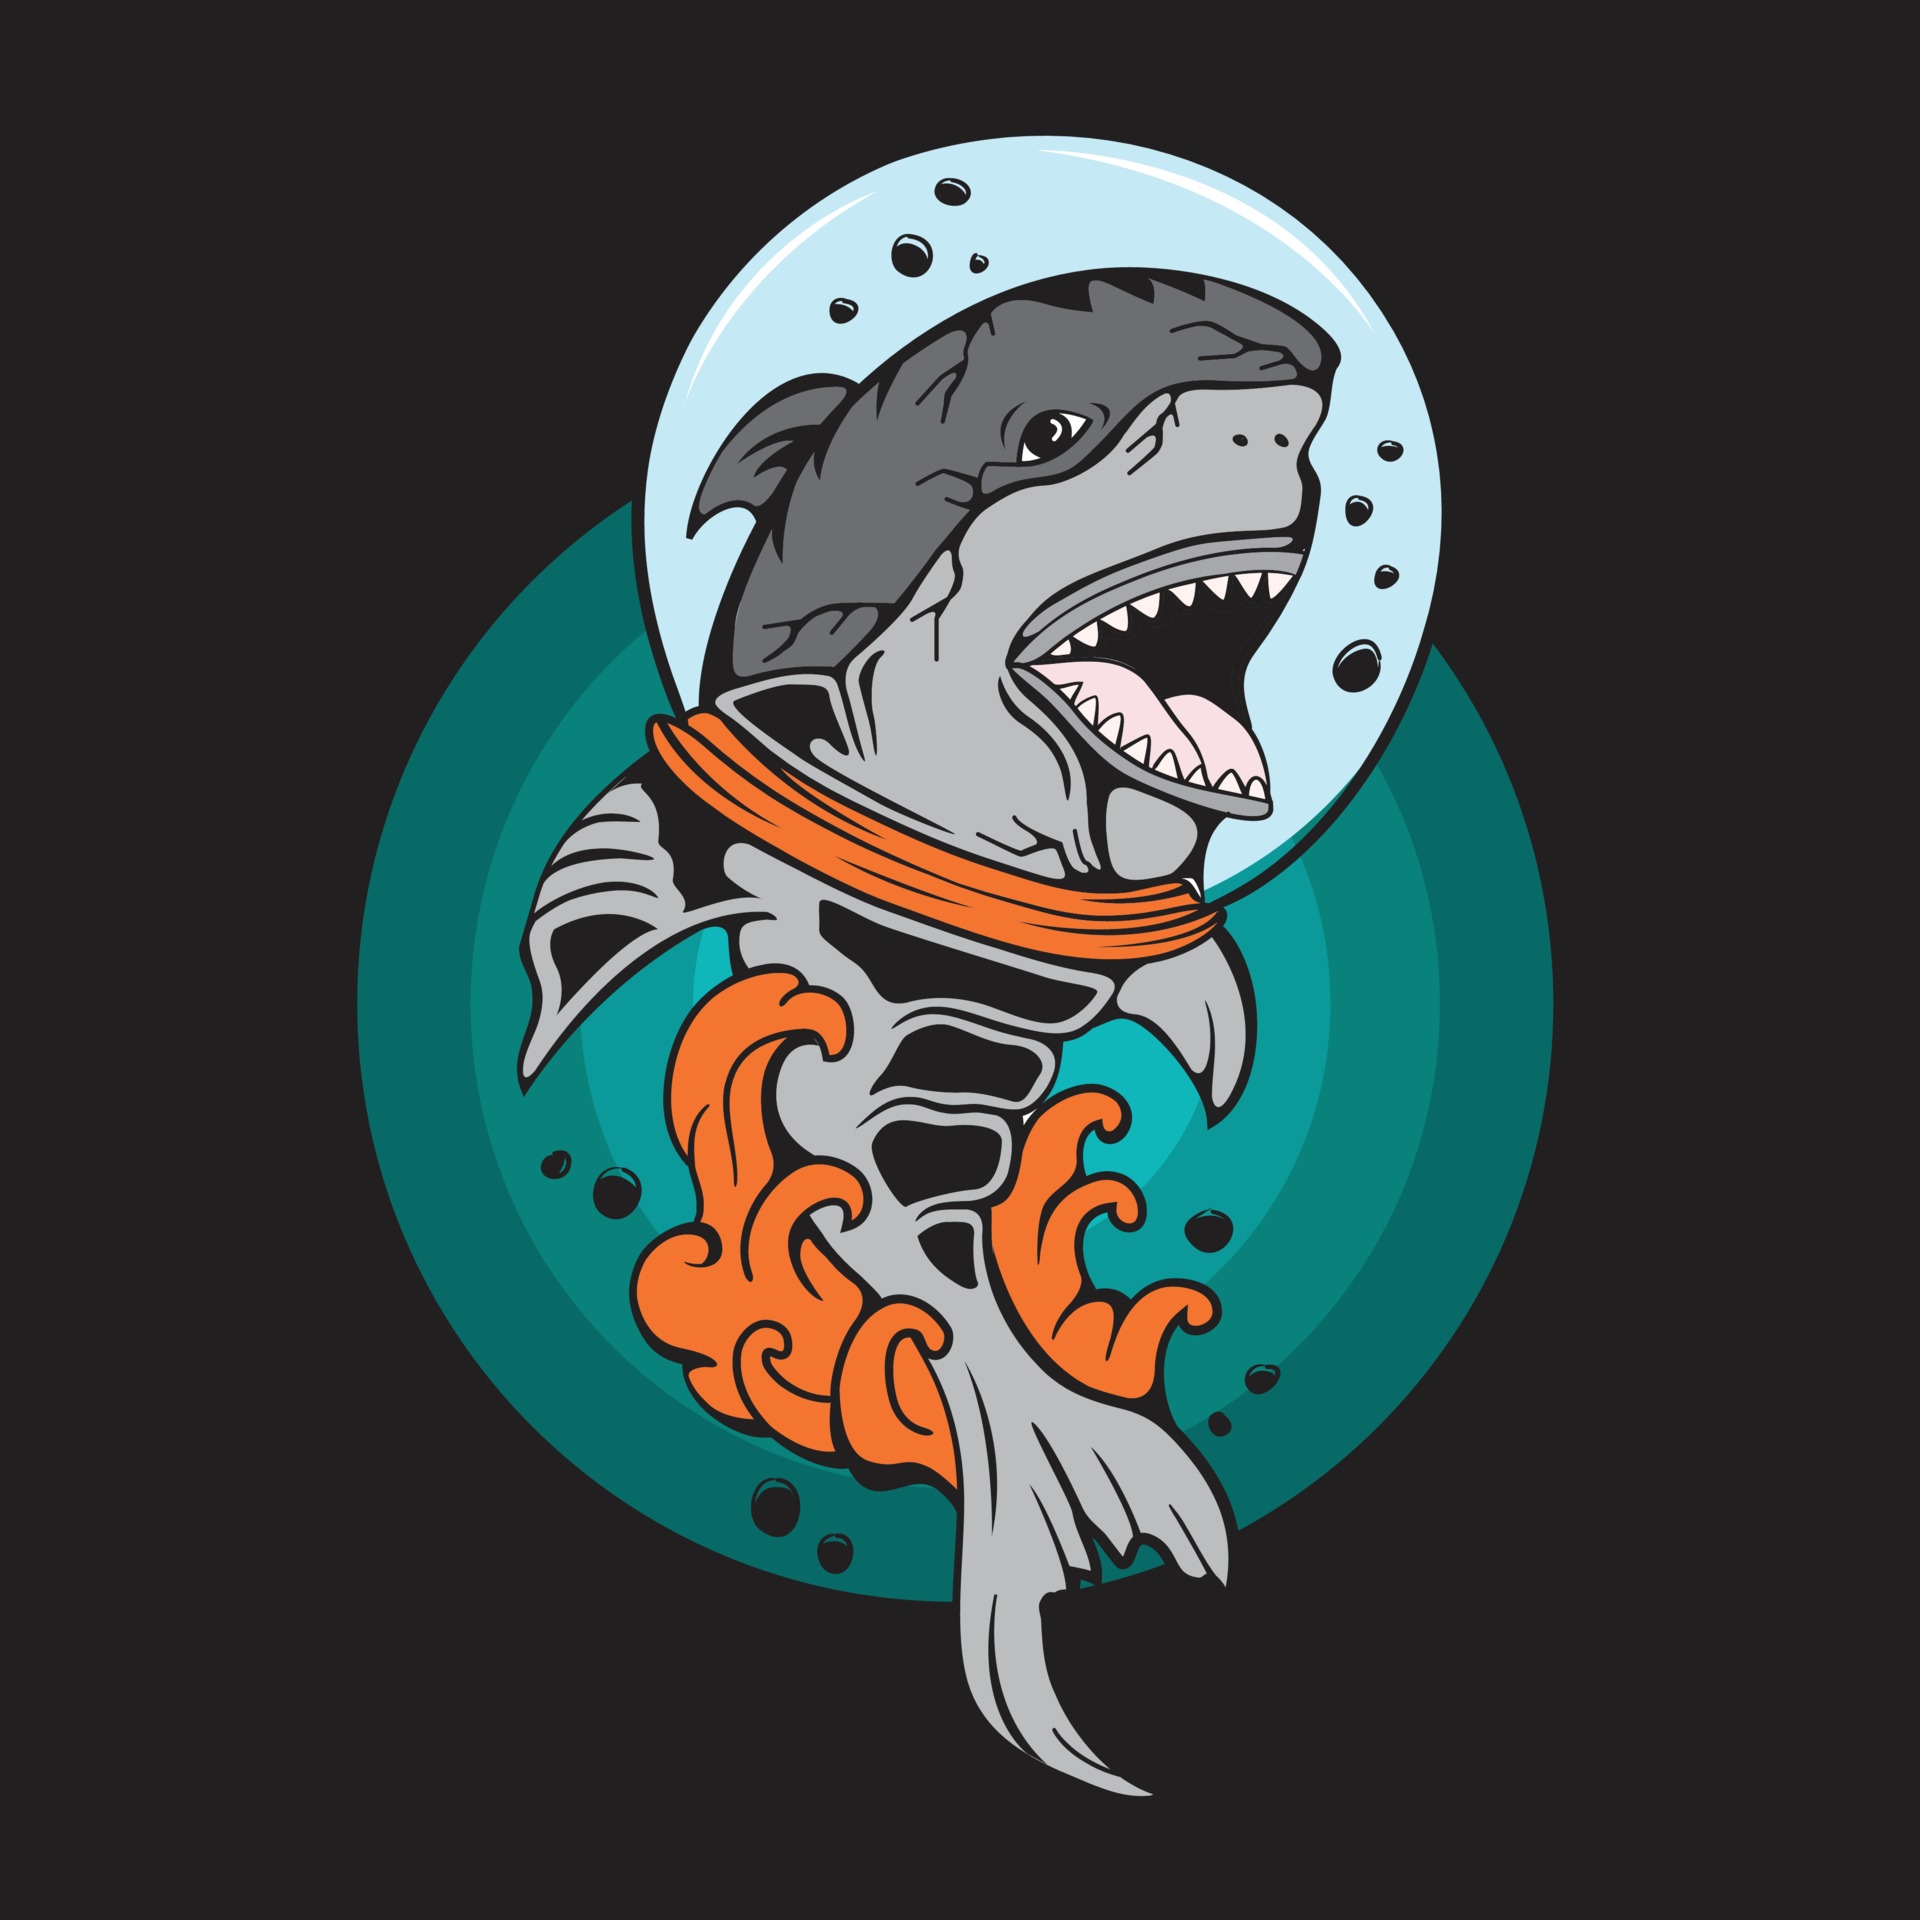 Blue Shark Mascot Illustration For Tshirt Design Royalty Free SVG,  Cliparts, Vectors, and Stock Illustration. Image 136596915.